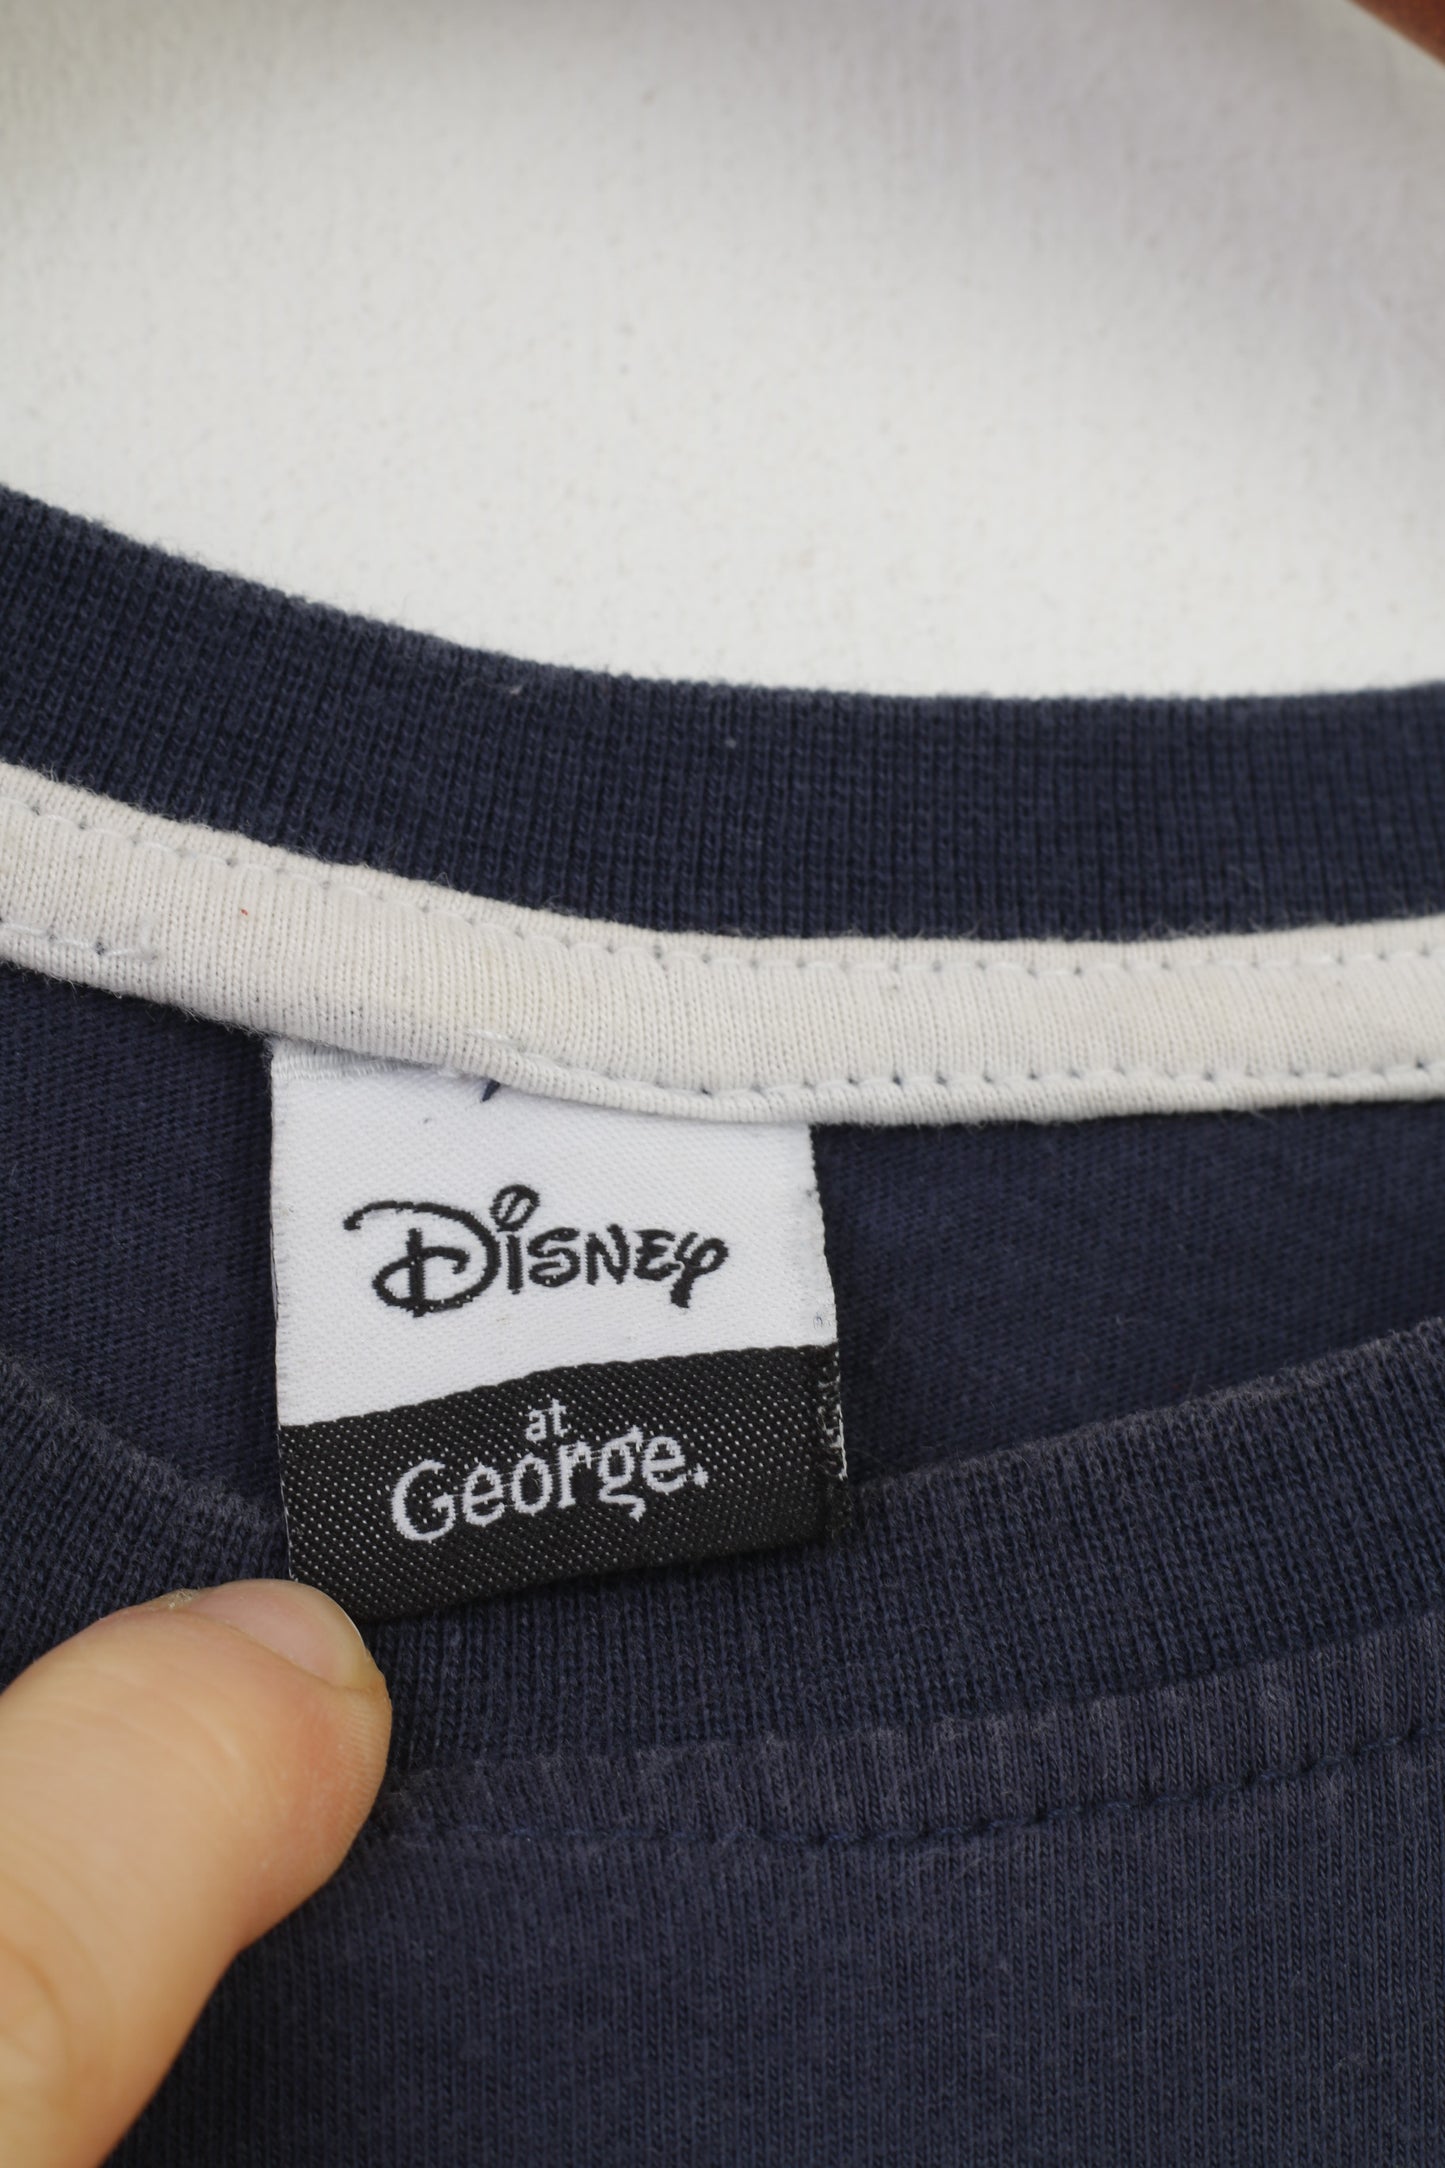 Disney At George Men S T-Shirt Navy Cotton Graphic Animal Calling Vintage Short Sleeve Top